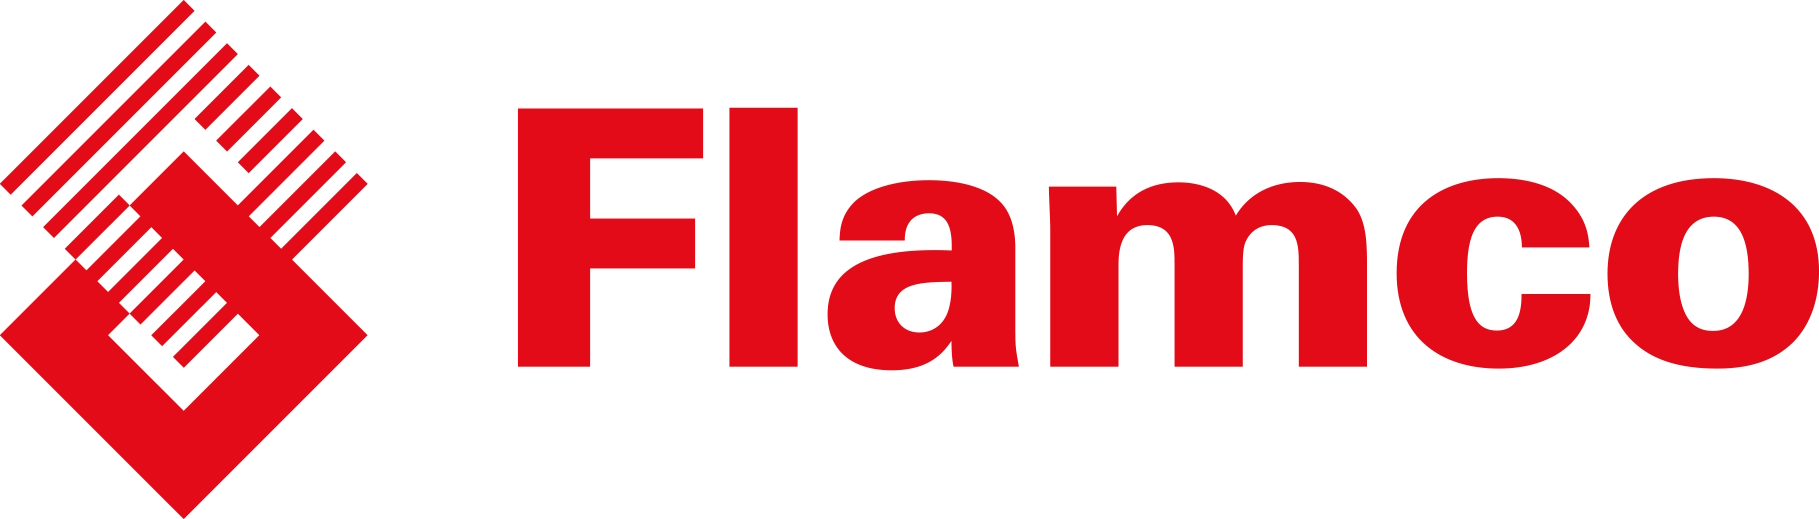 Logo Flamco